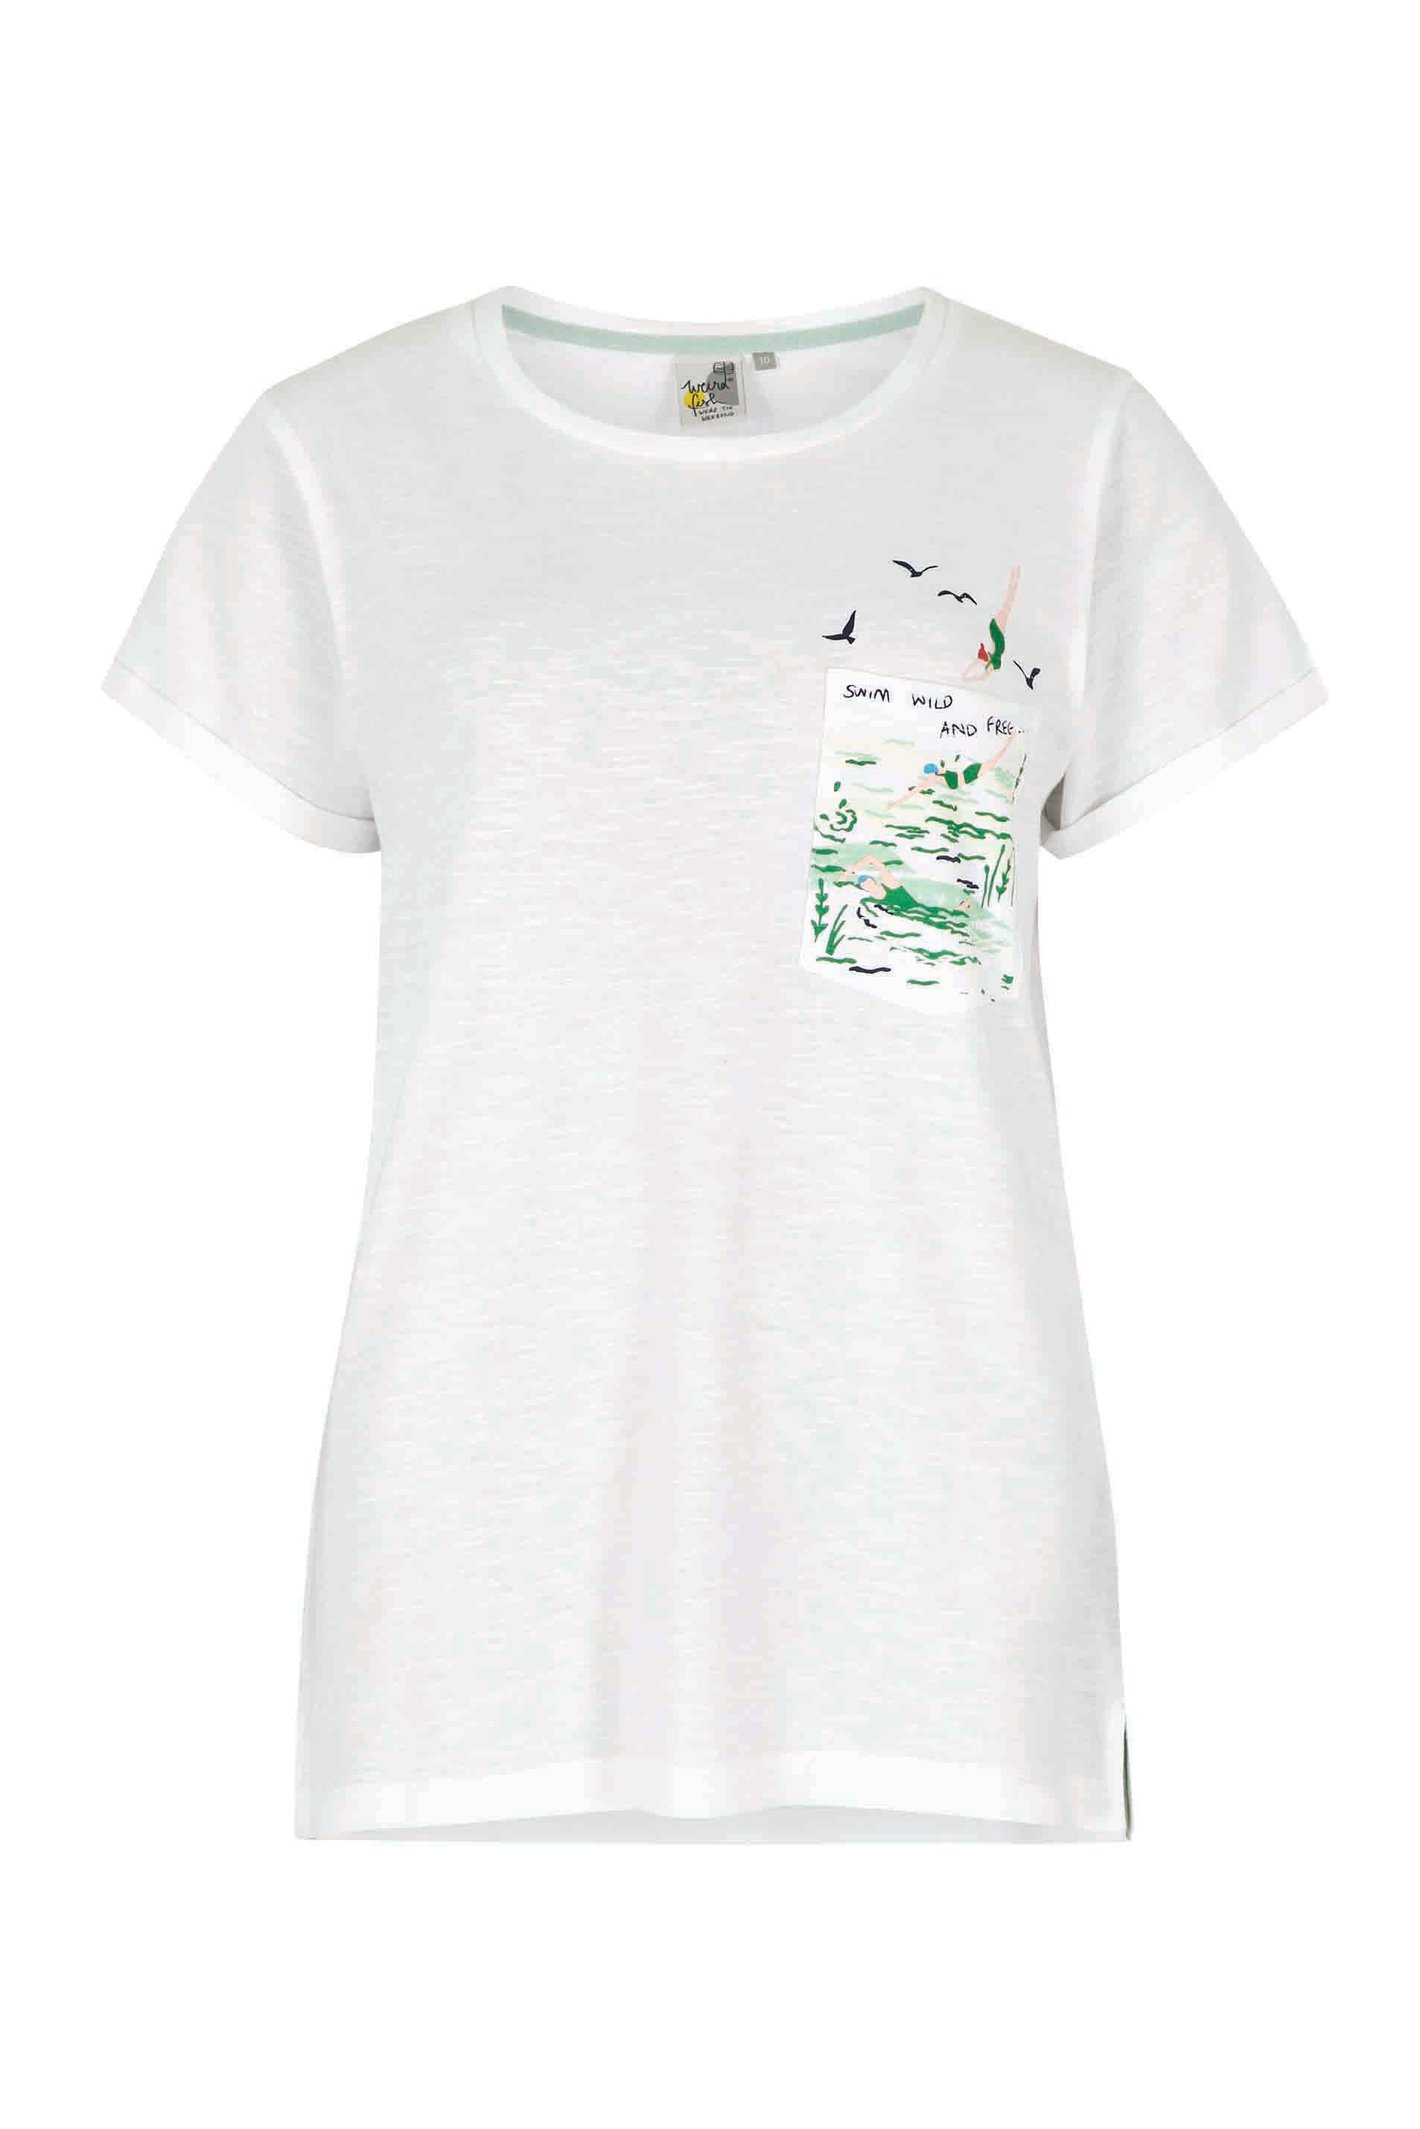 Weird Fish Wild Swimmers Organic Cotton T-Shirt White Size 18